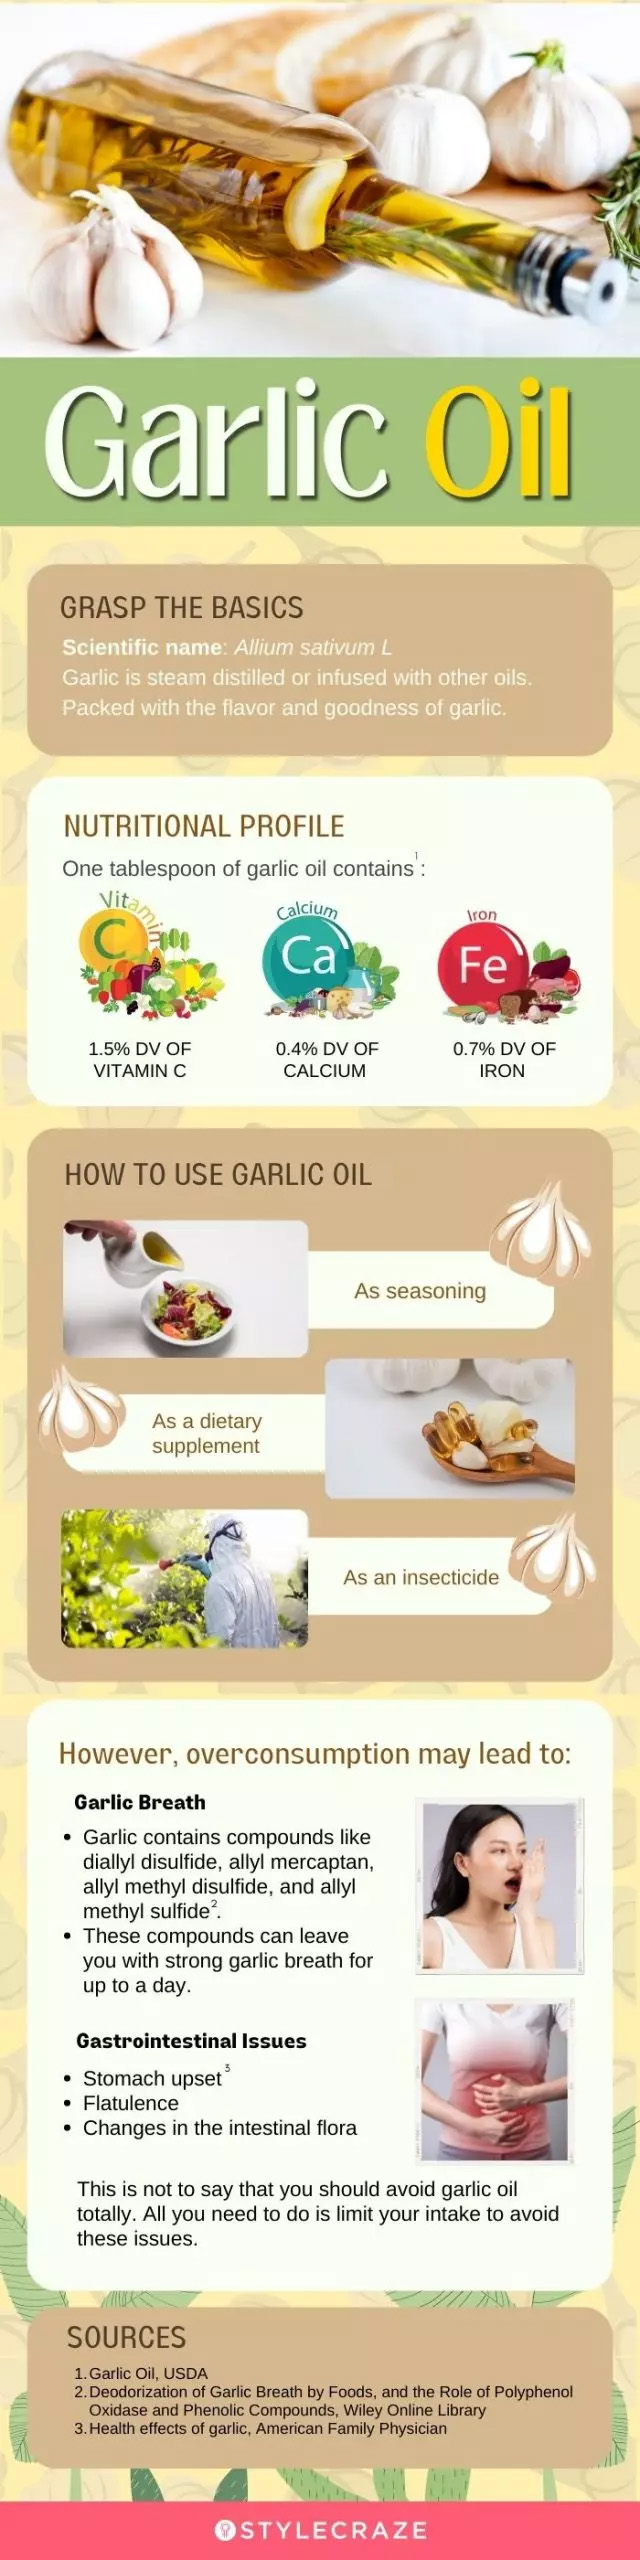 garlic oil (infographic)